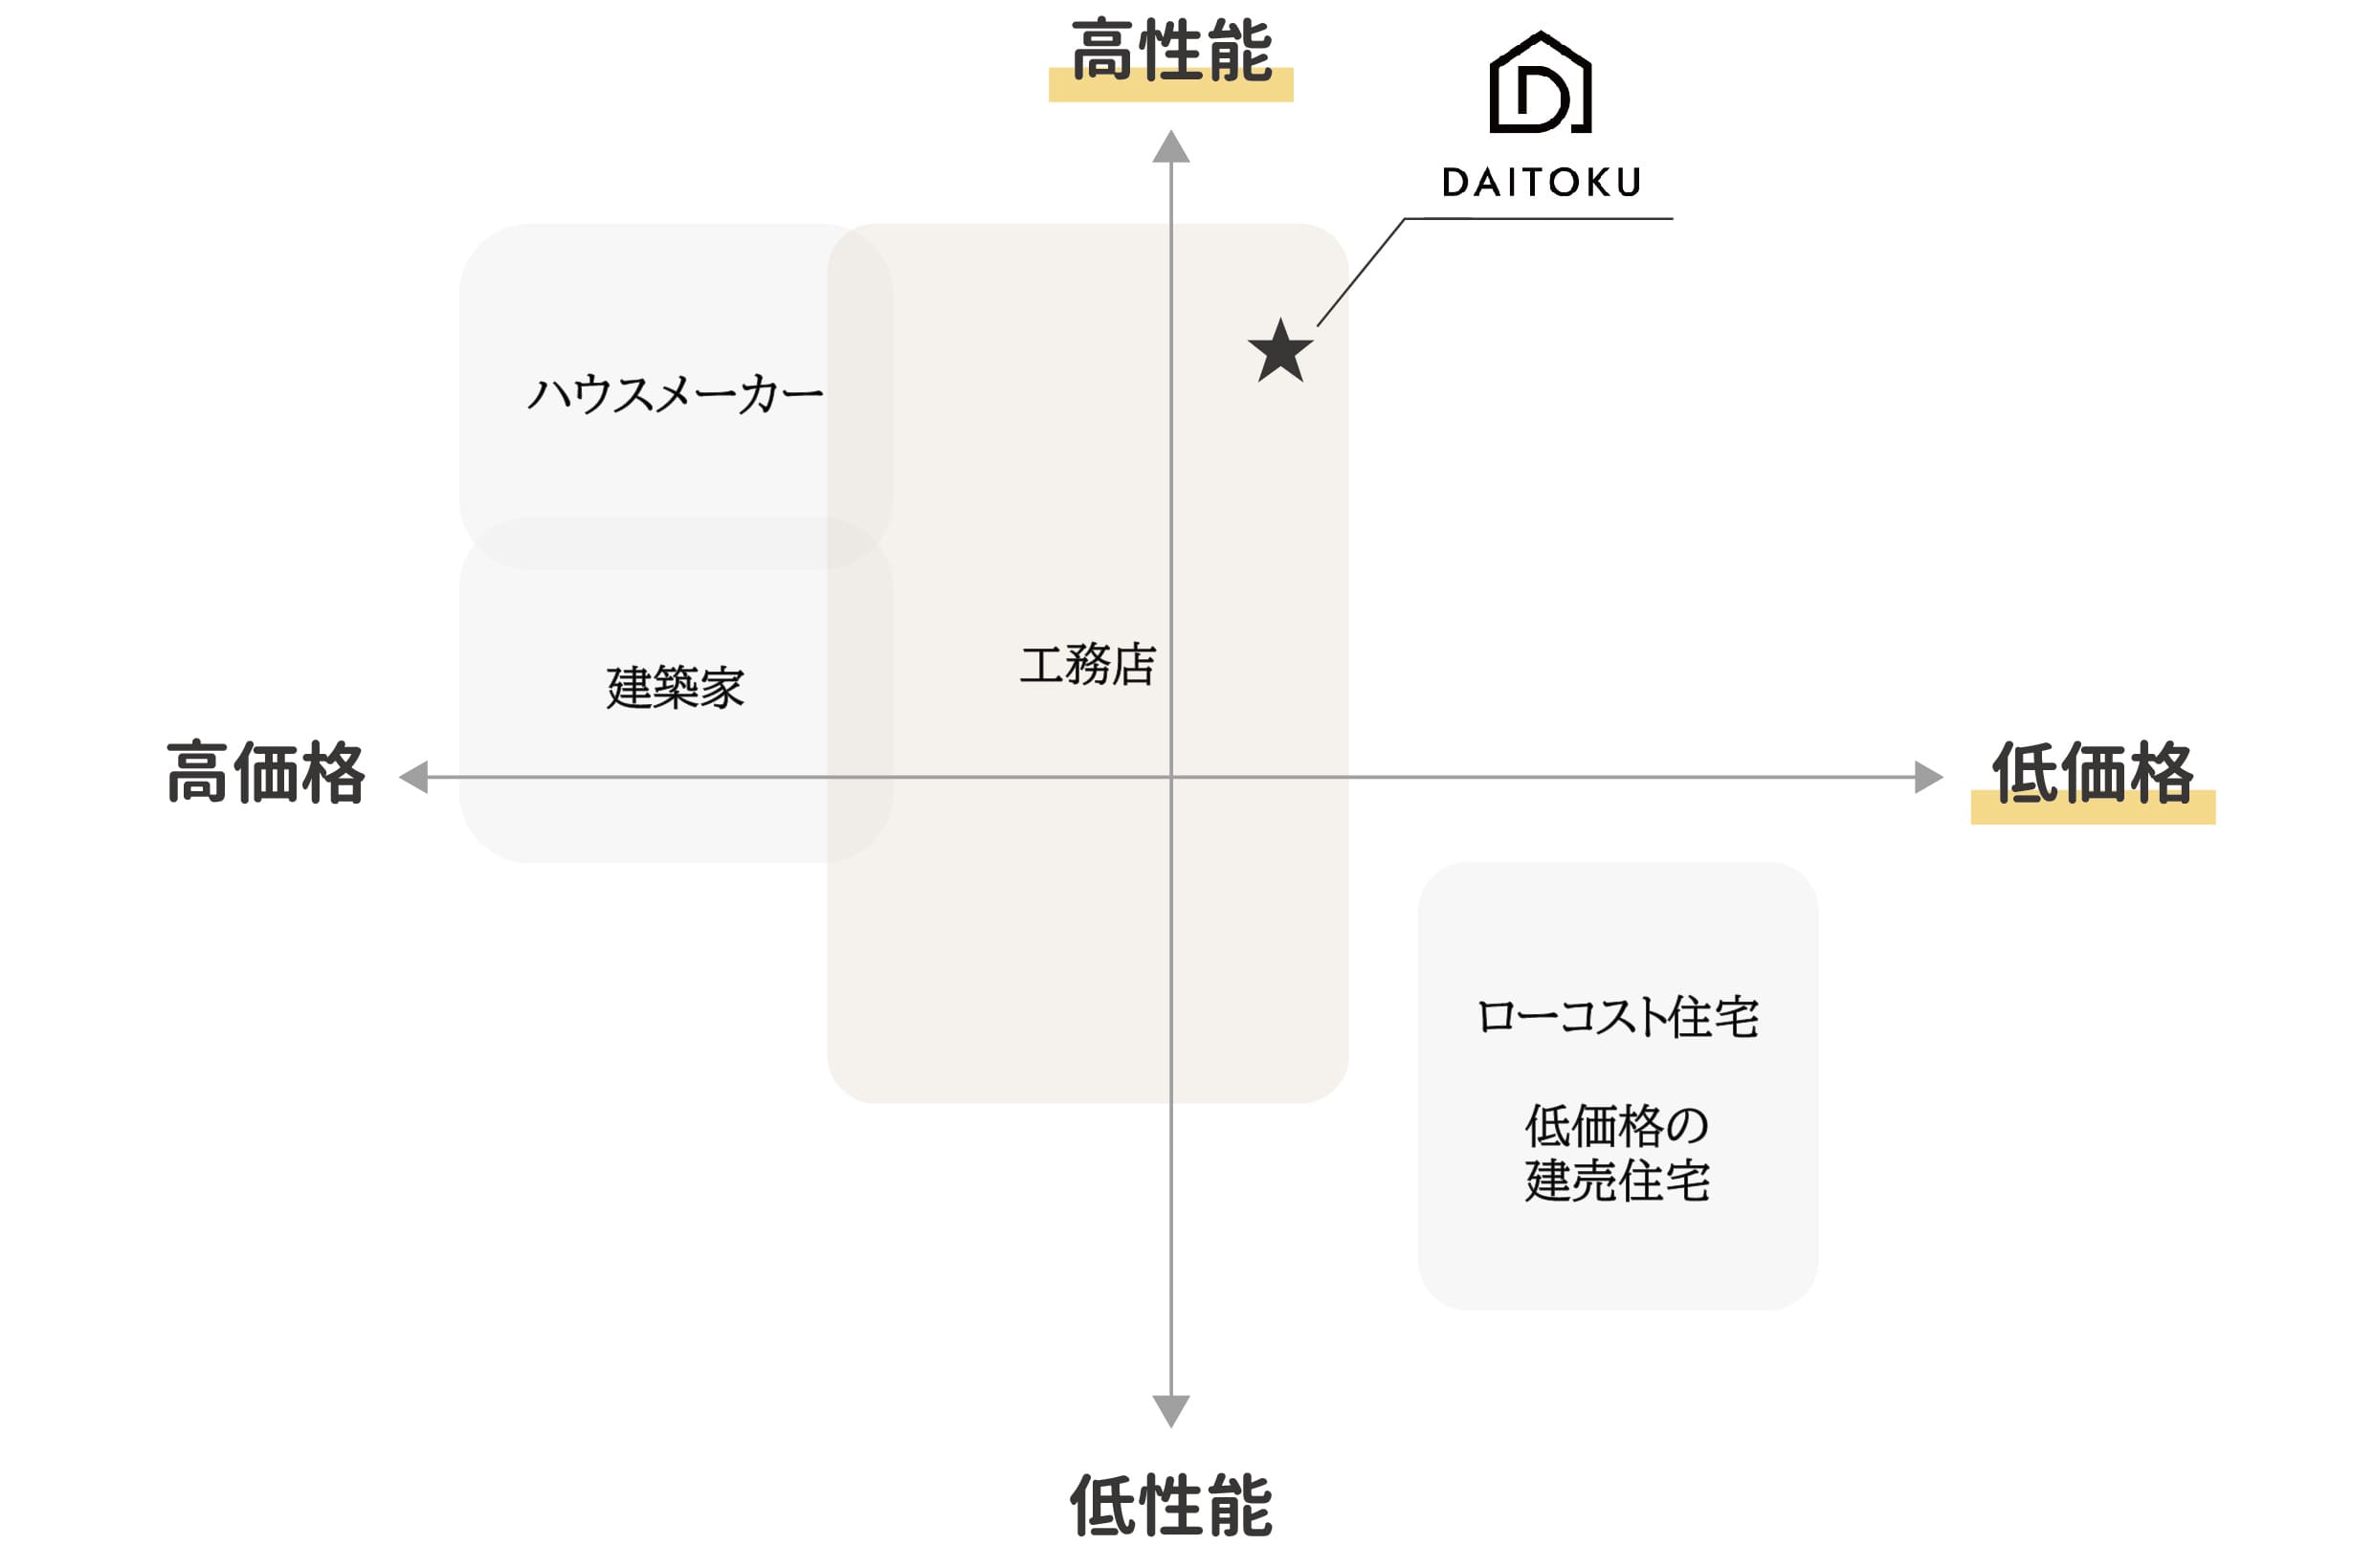 DAITOKUと他社との違い チャート図